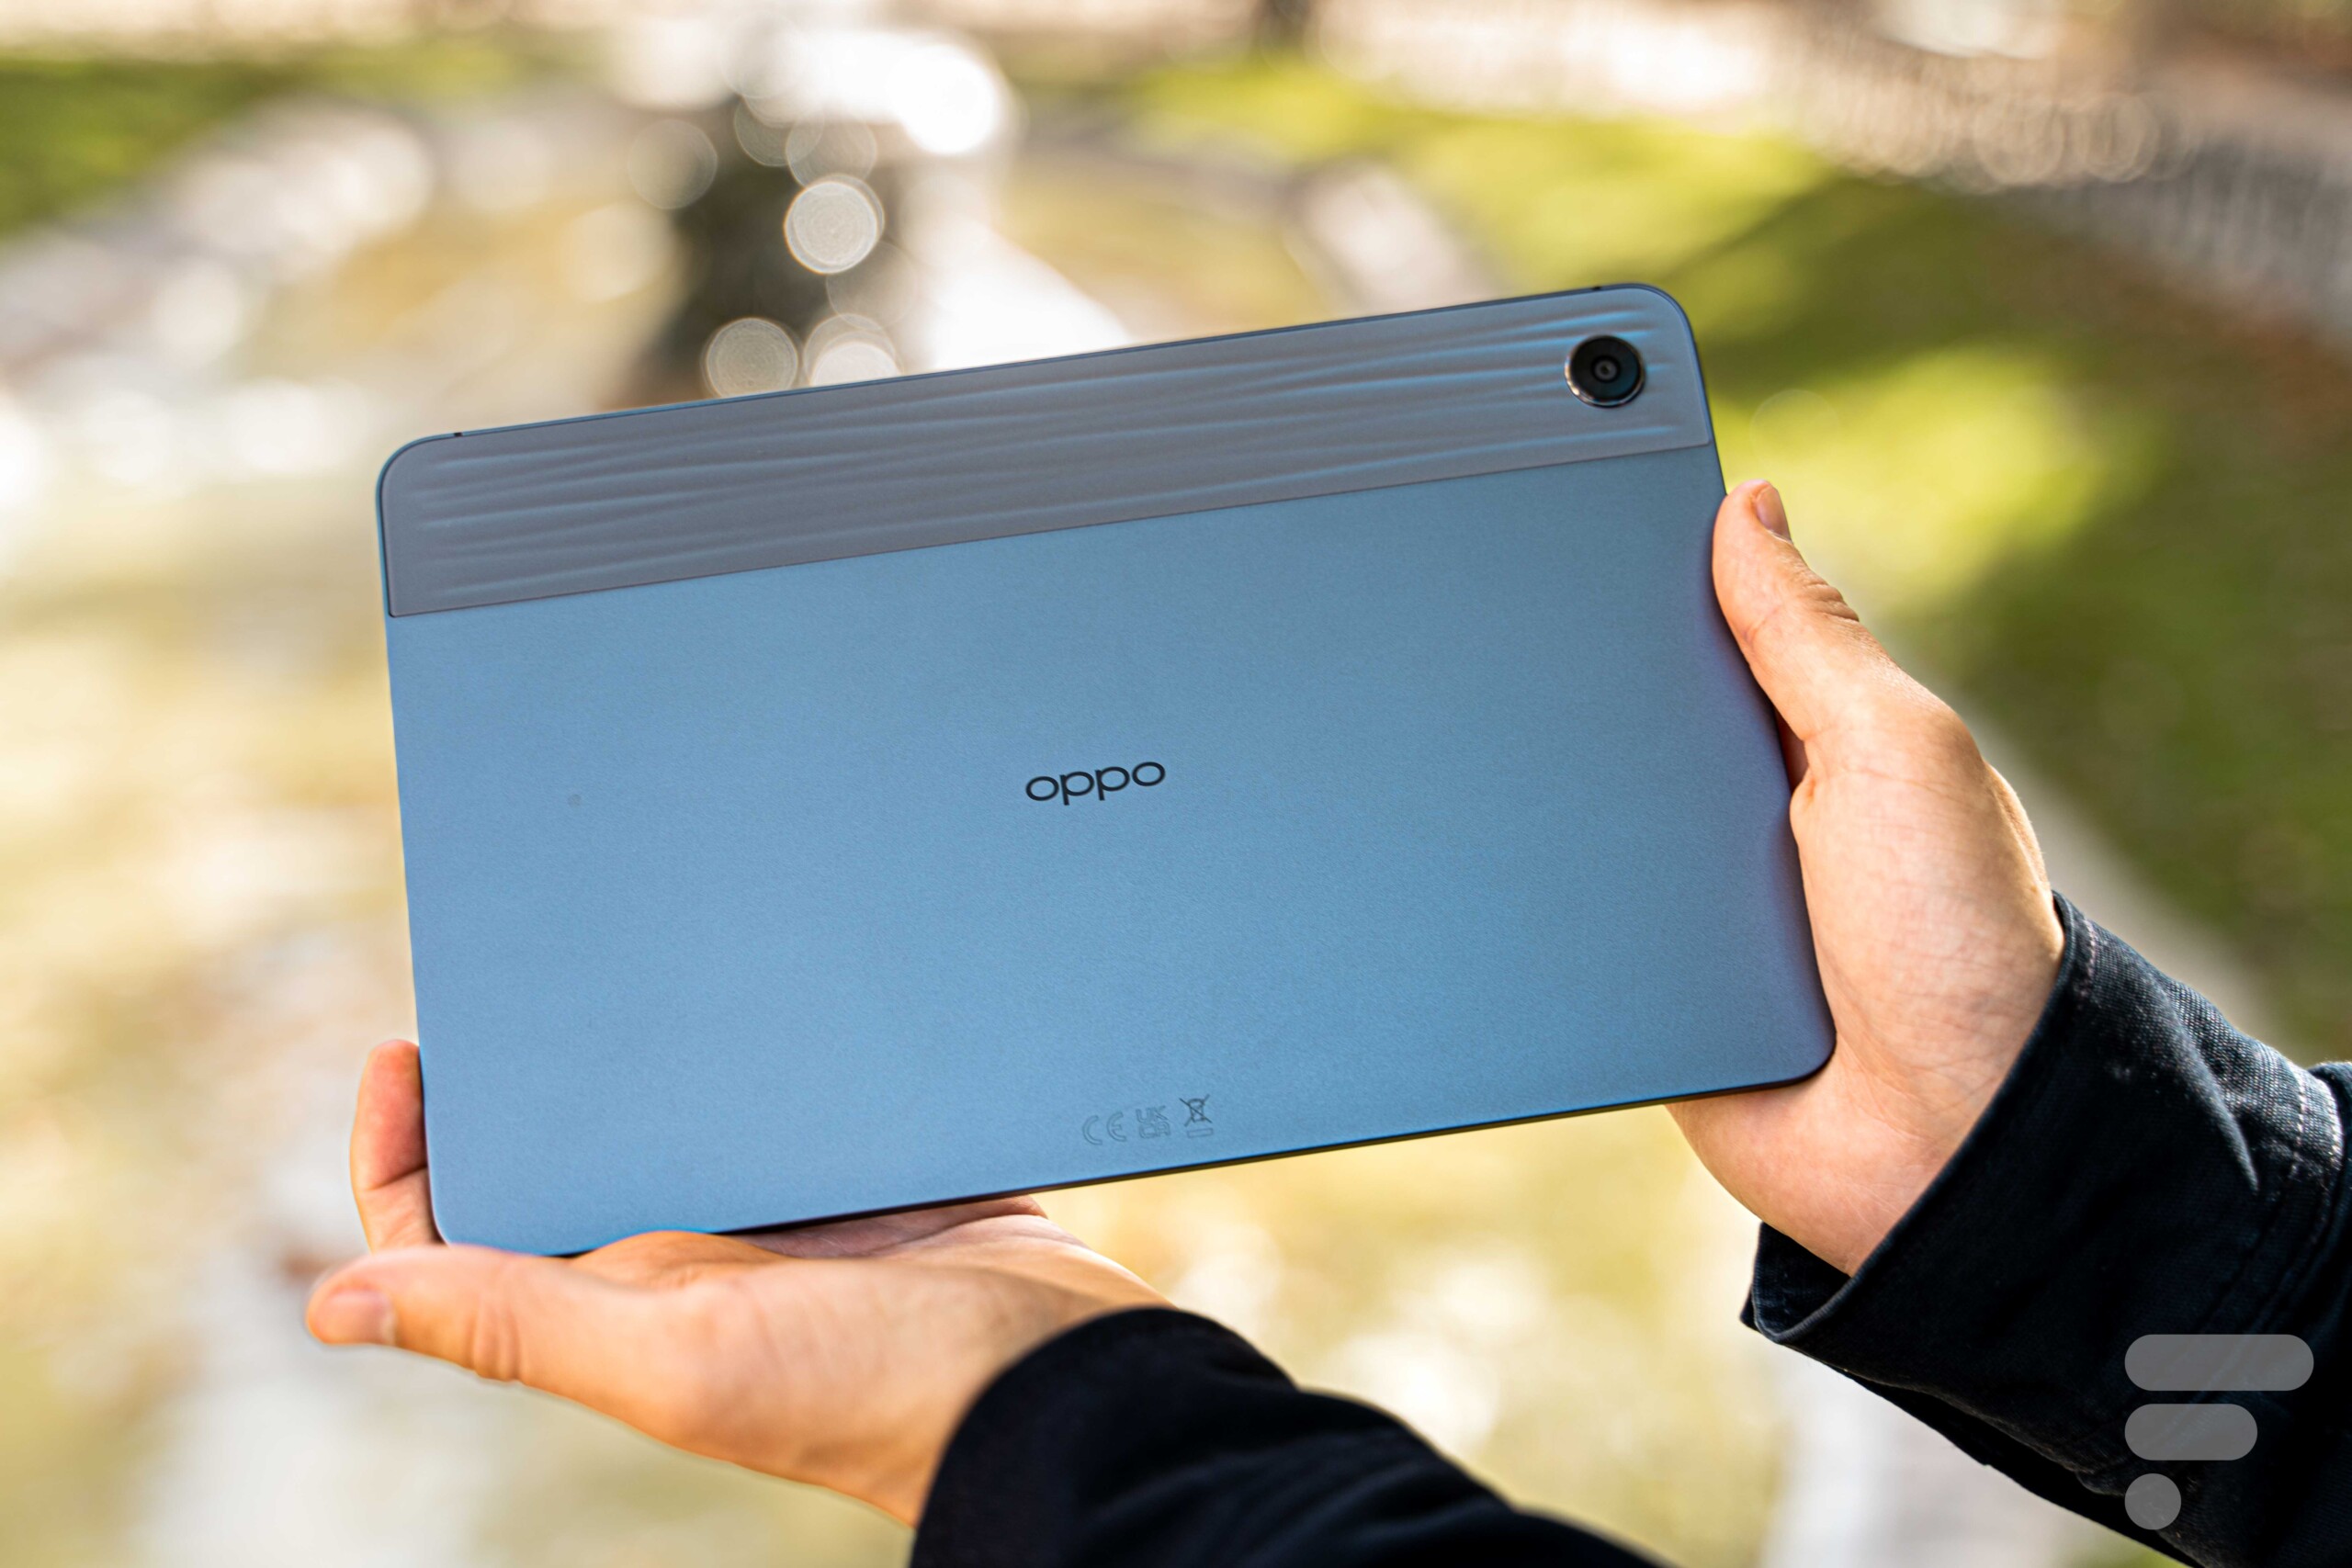 Tablette Oppo Pad Air Octa Core : : Informatique